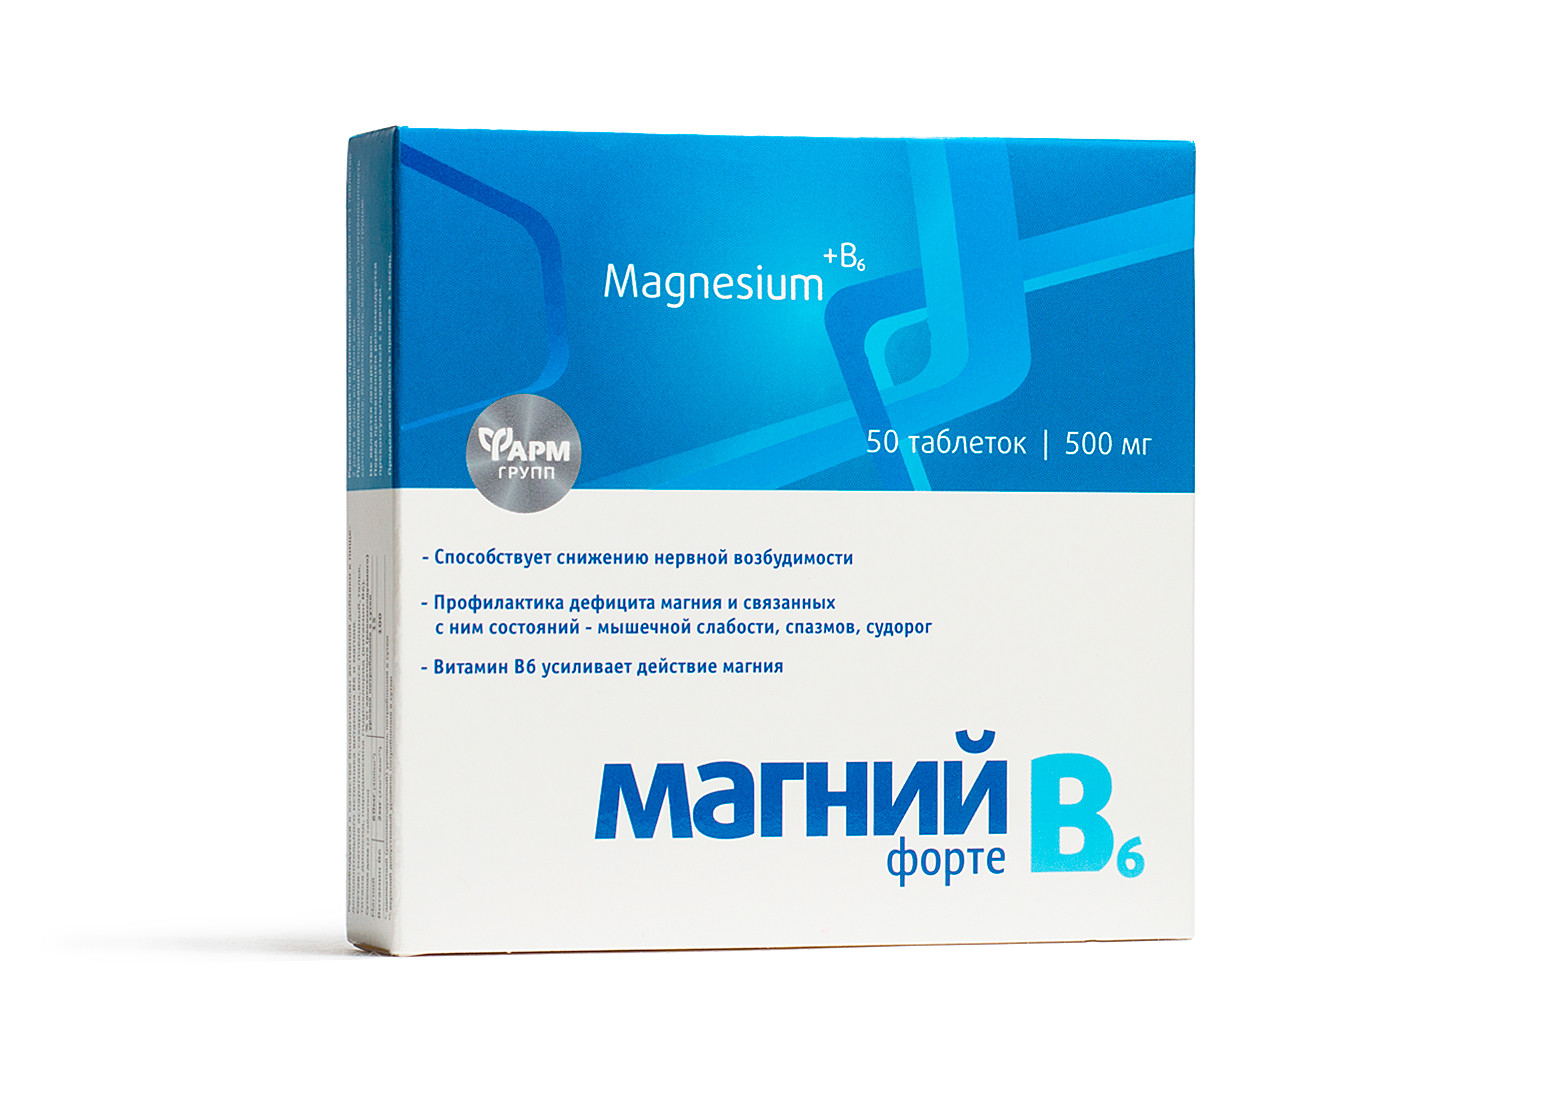 Магний В6-форте 50 таблеток 25г Фармгрупп